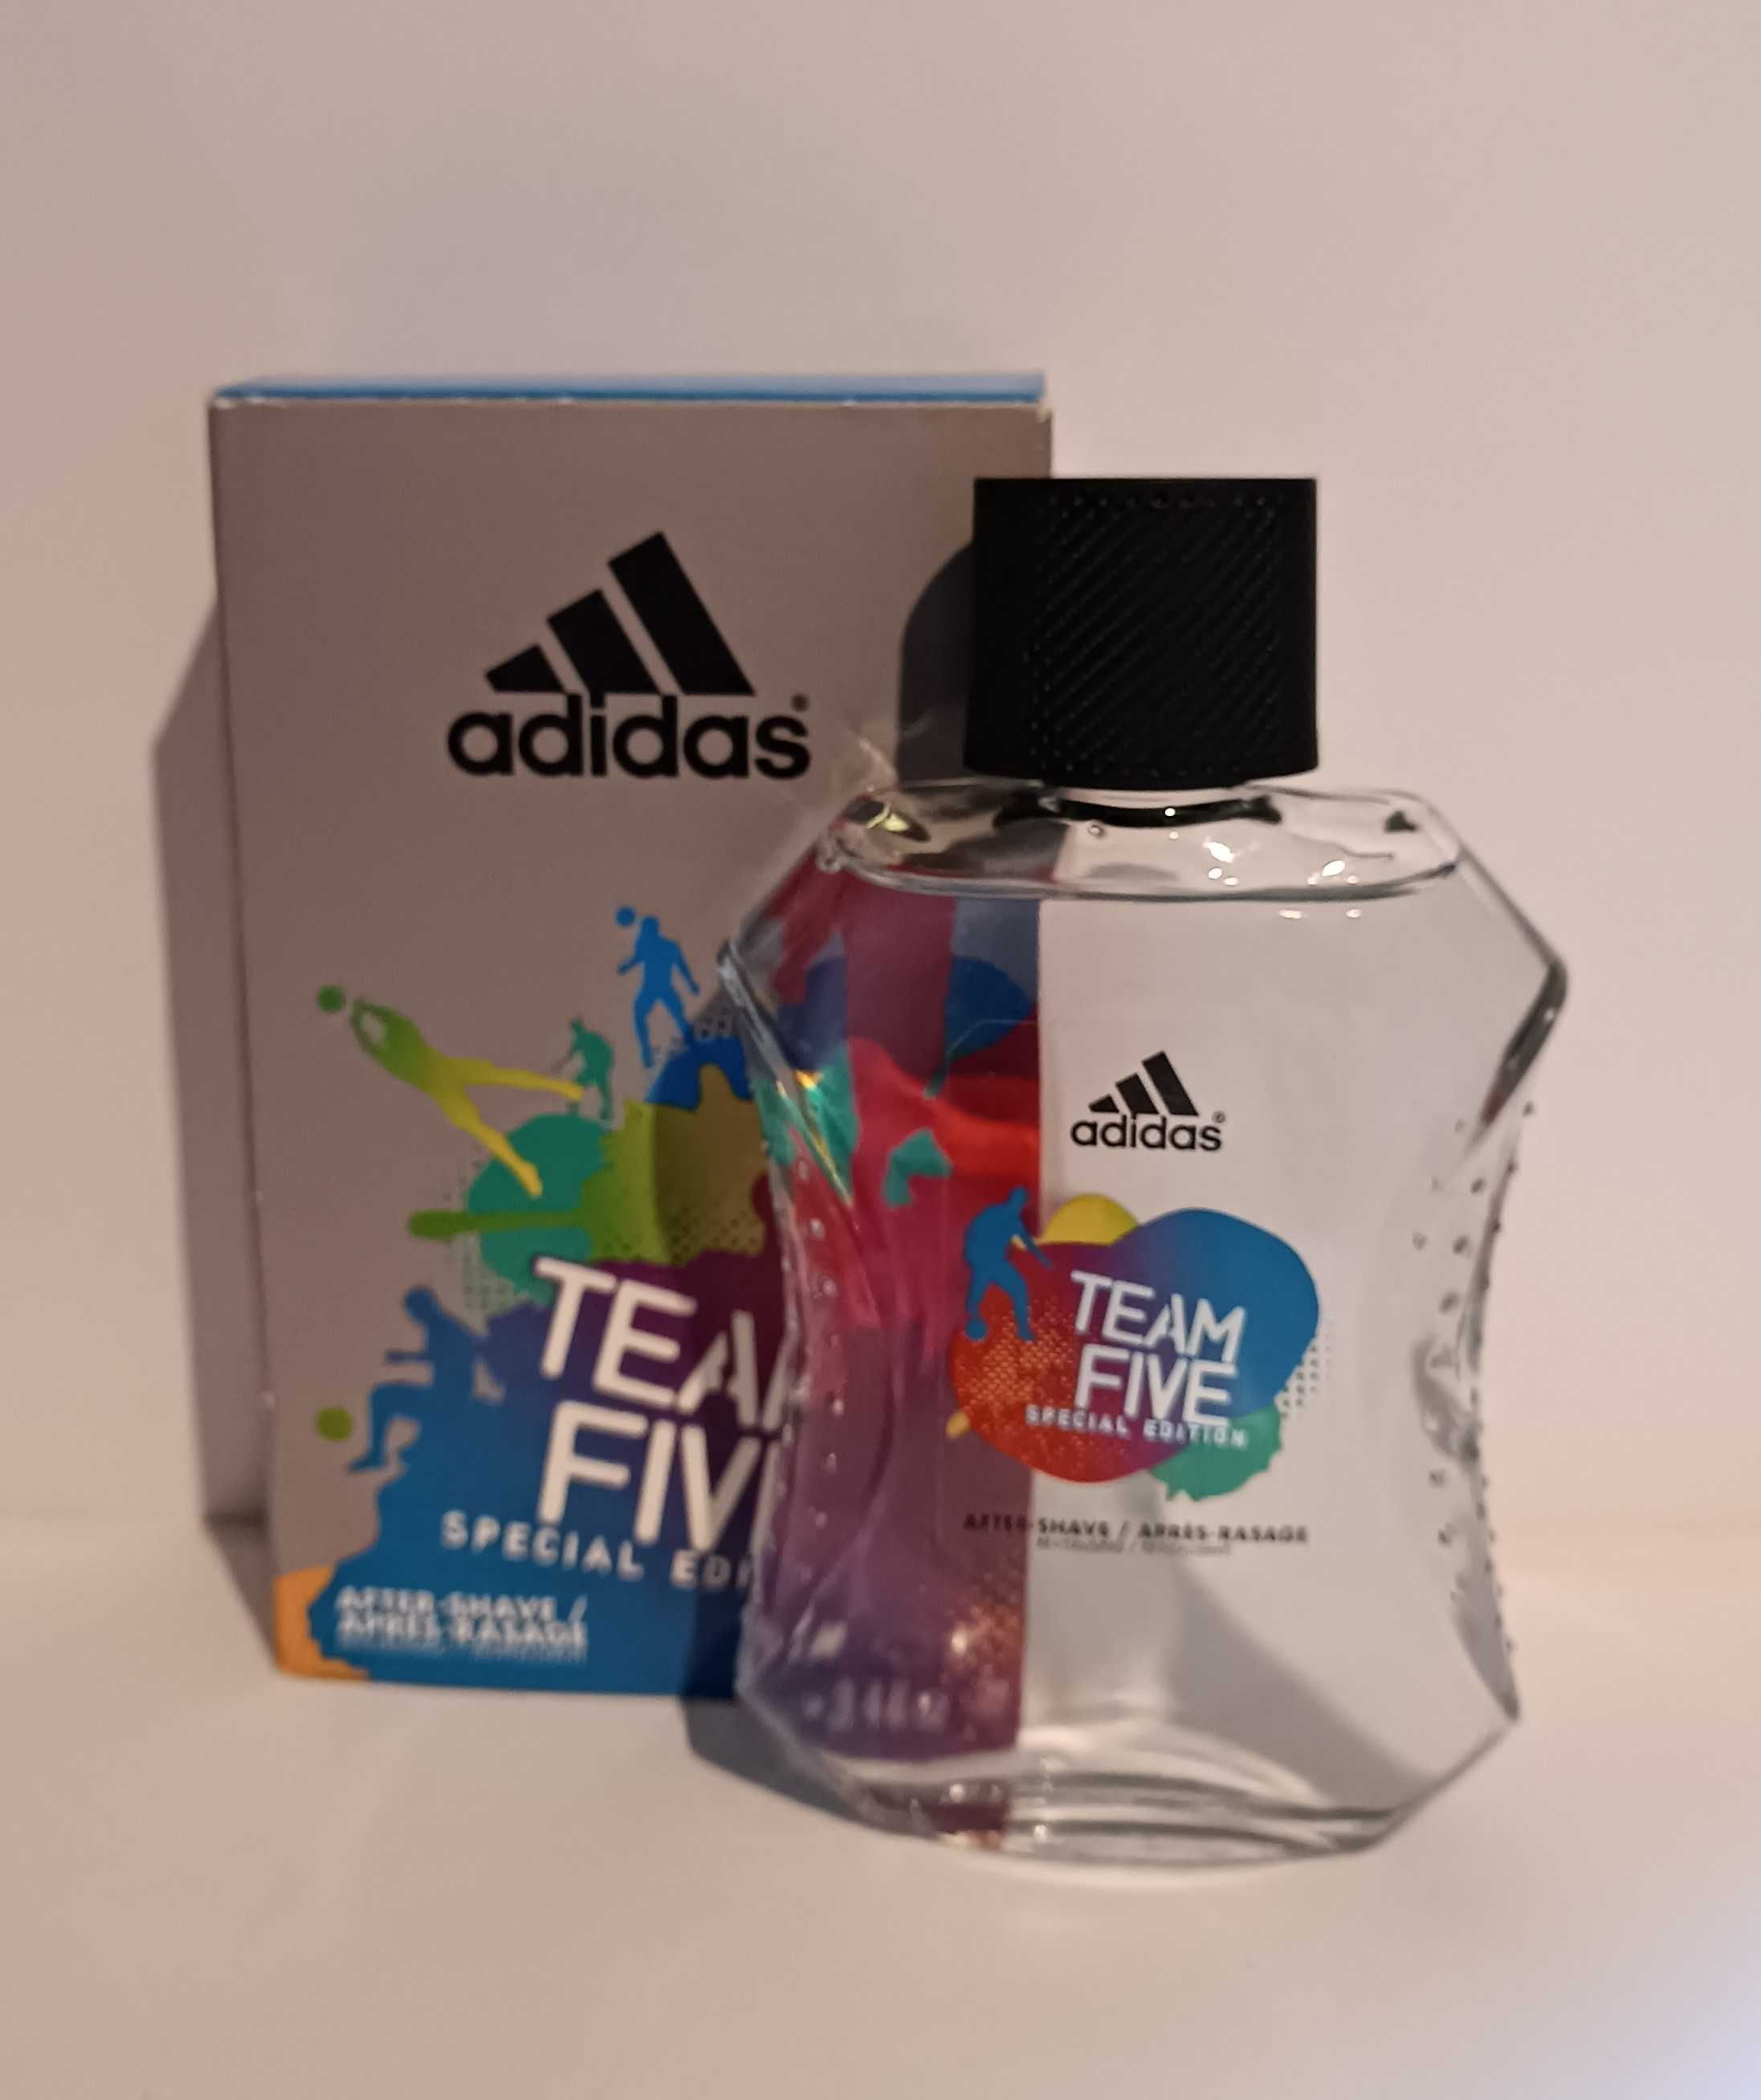 Adidas TEAM Five Special Edition 100ml woda po goleniu